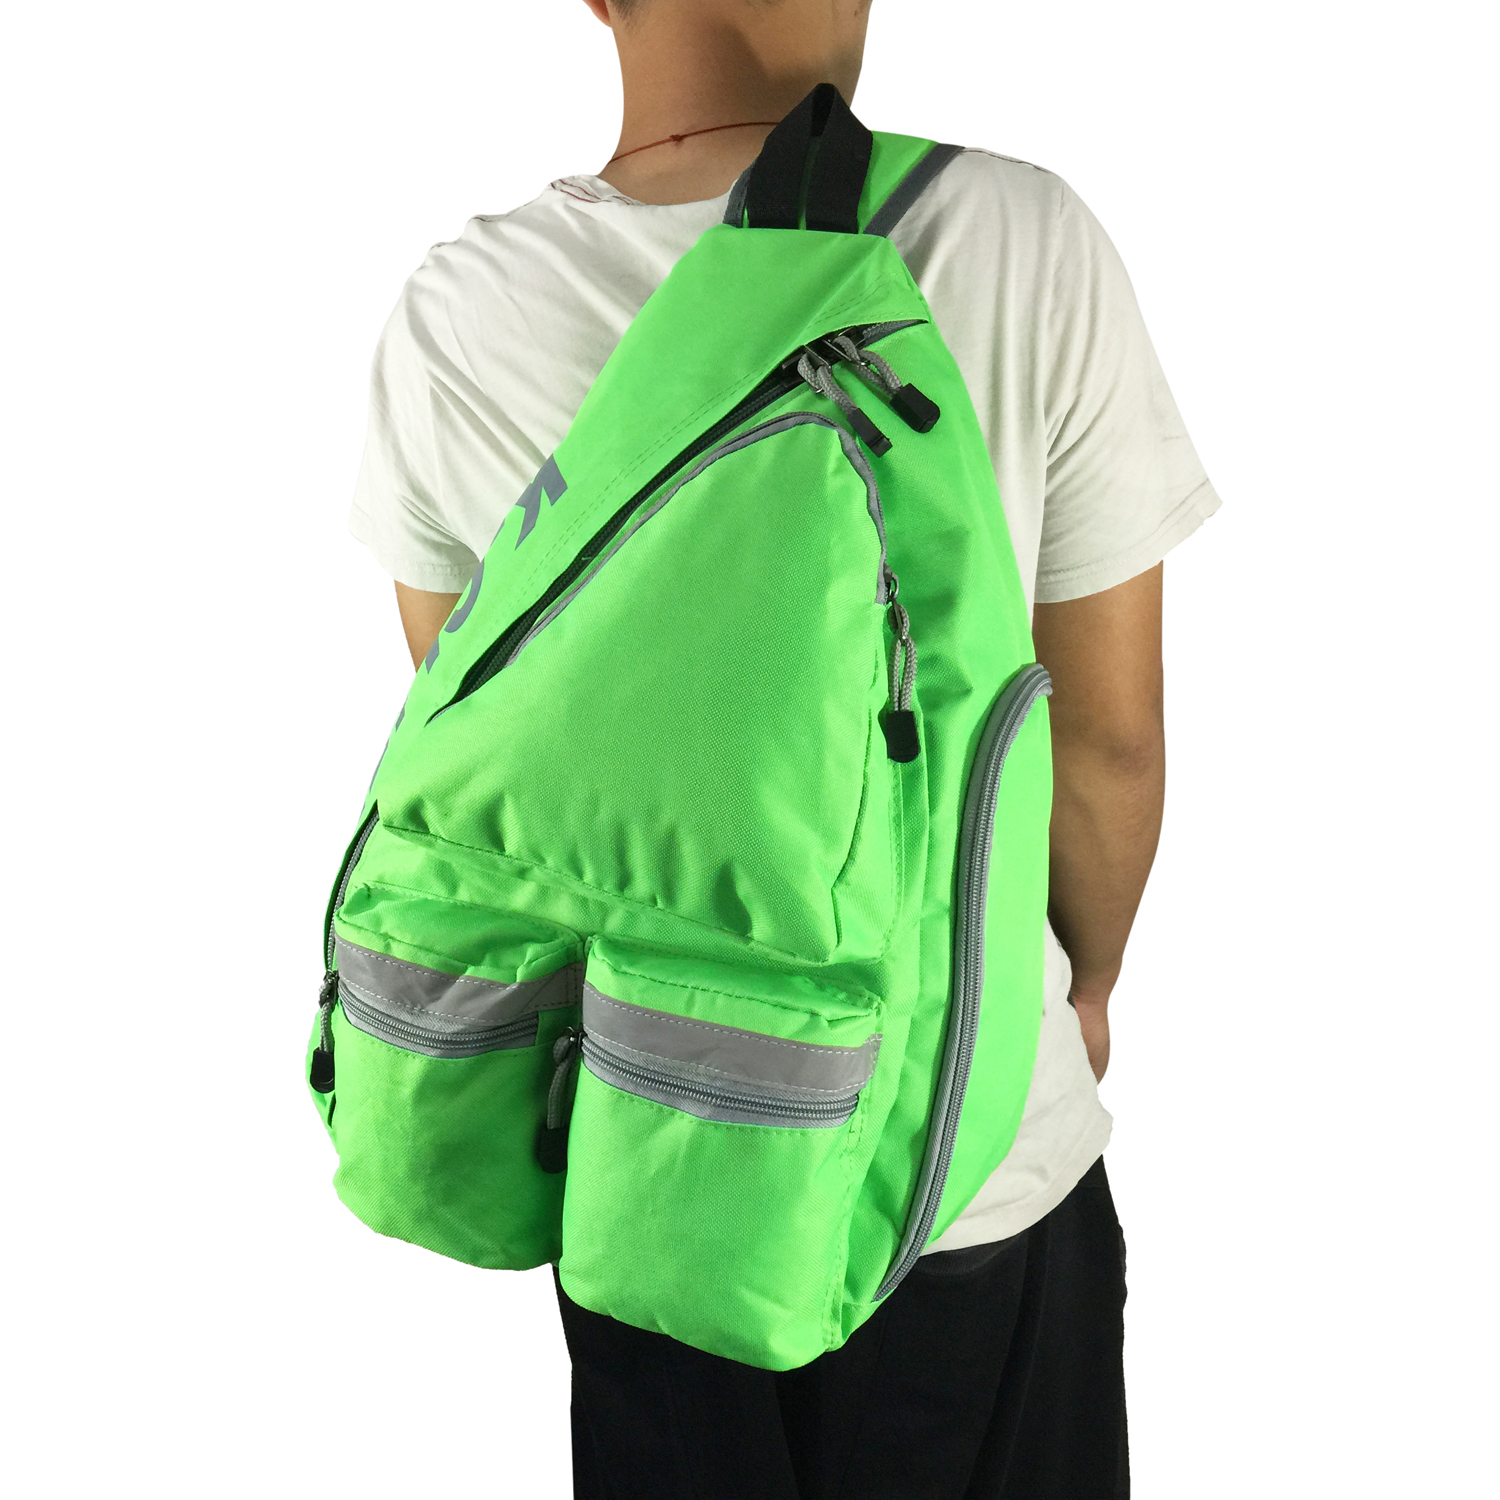 K-Cliffs Reflective Sling Backpack Bright Color Safety Cross Body Bag Student Daypack Bookbag Green - image 2 of 7